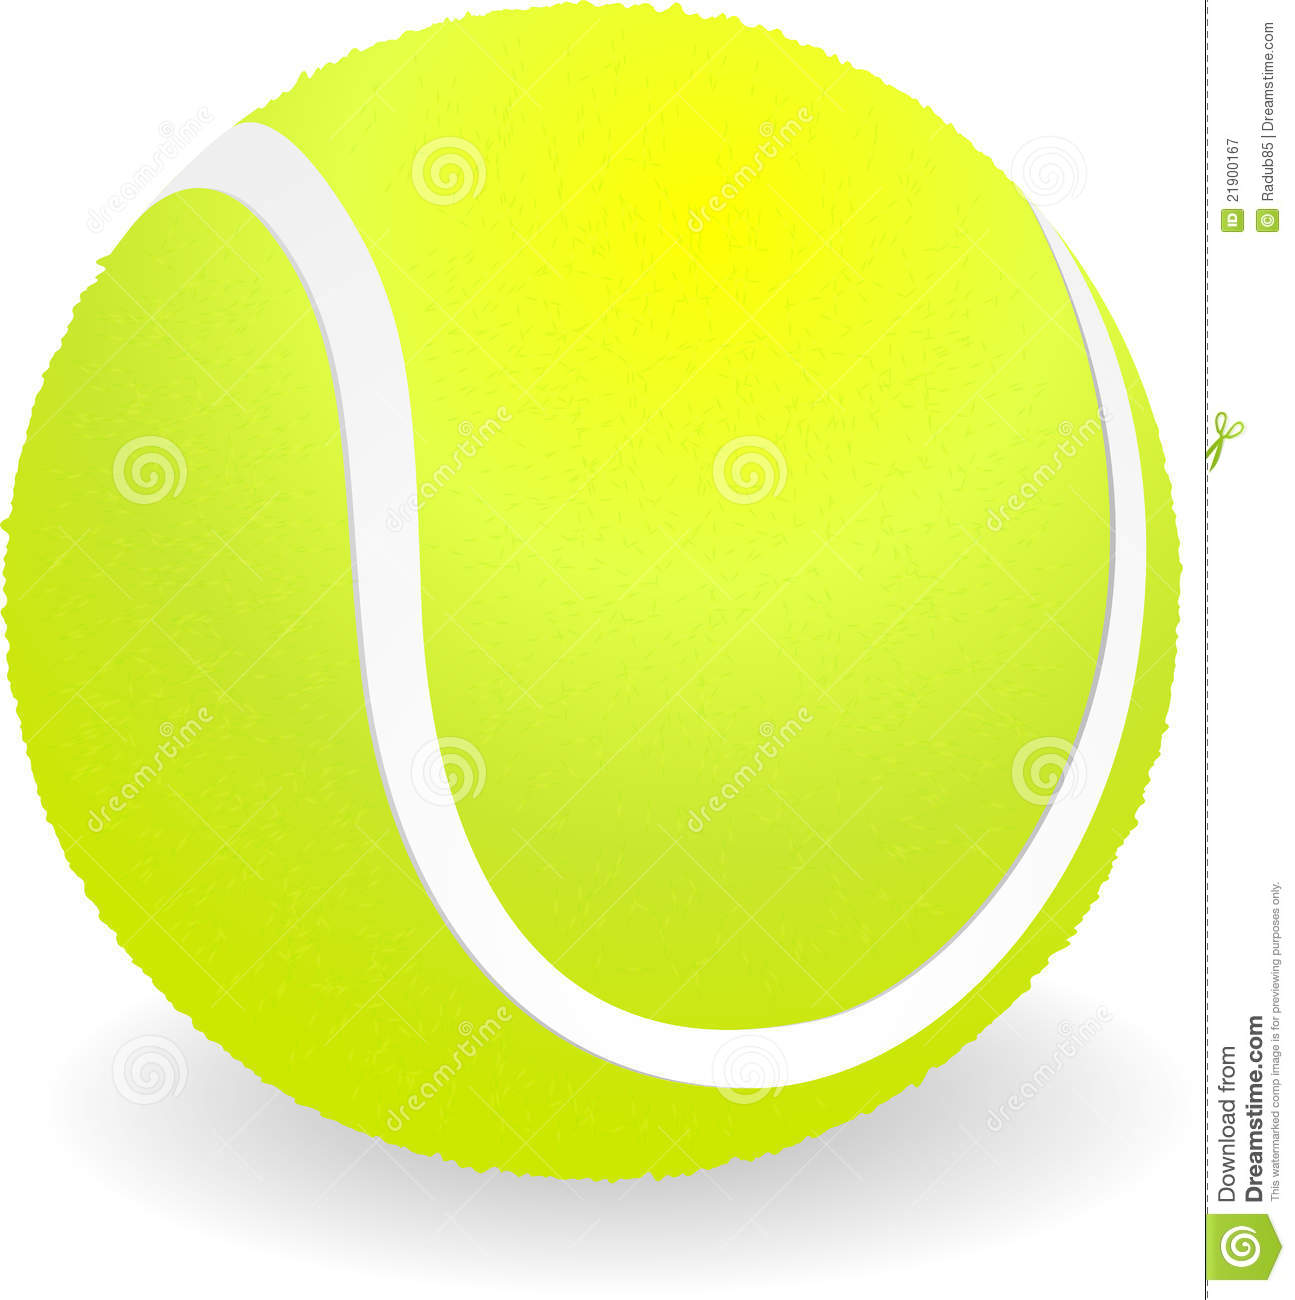 tennis ball bouncing clipart fish